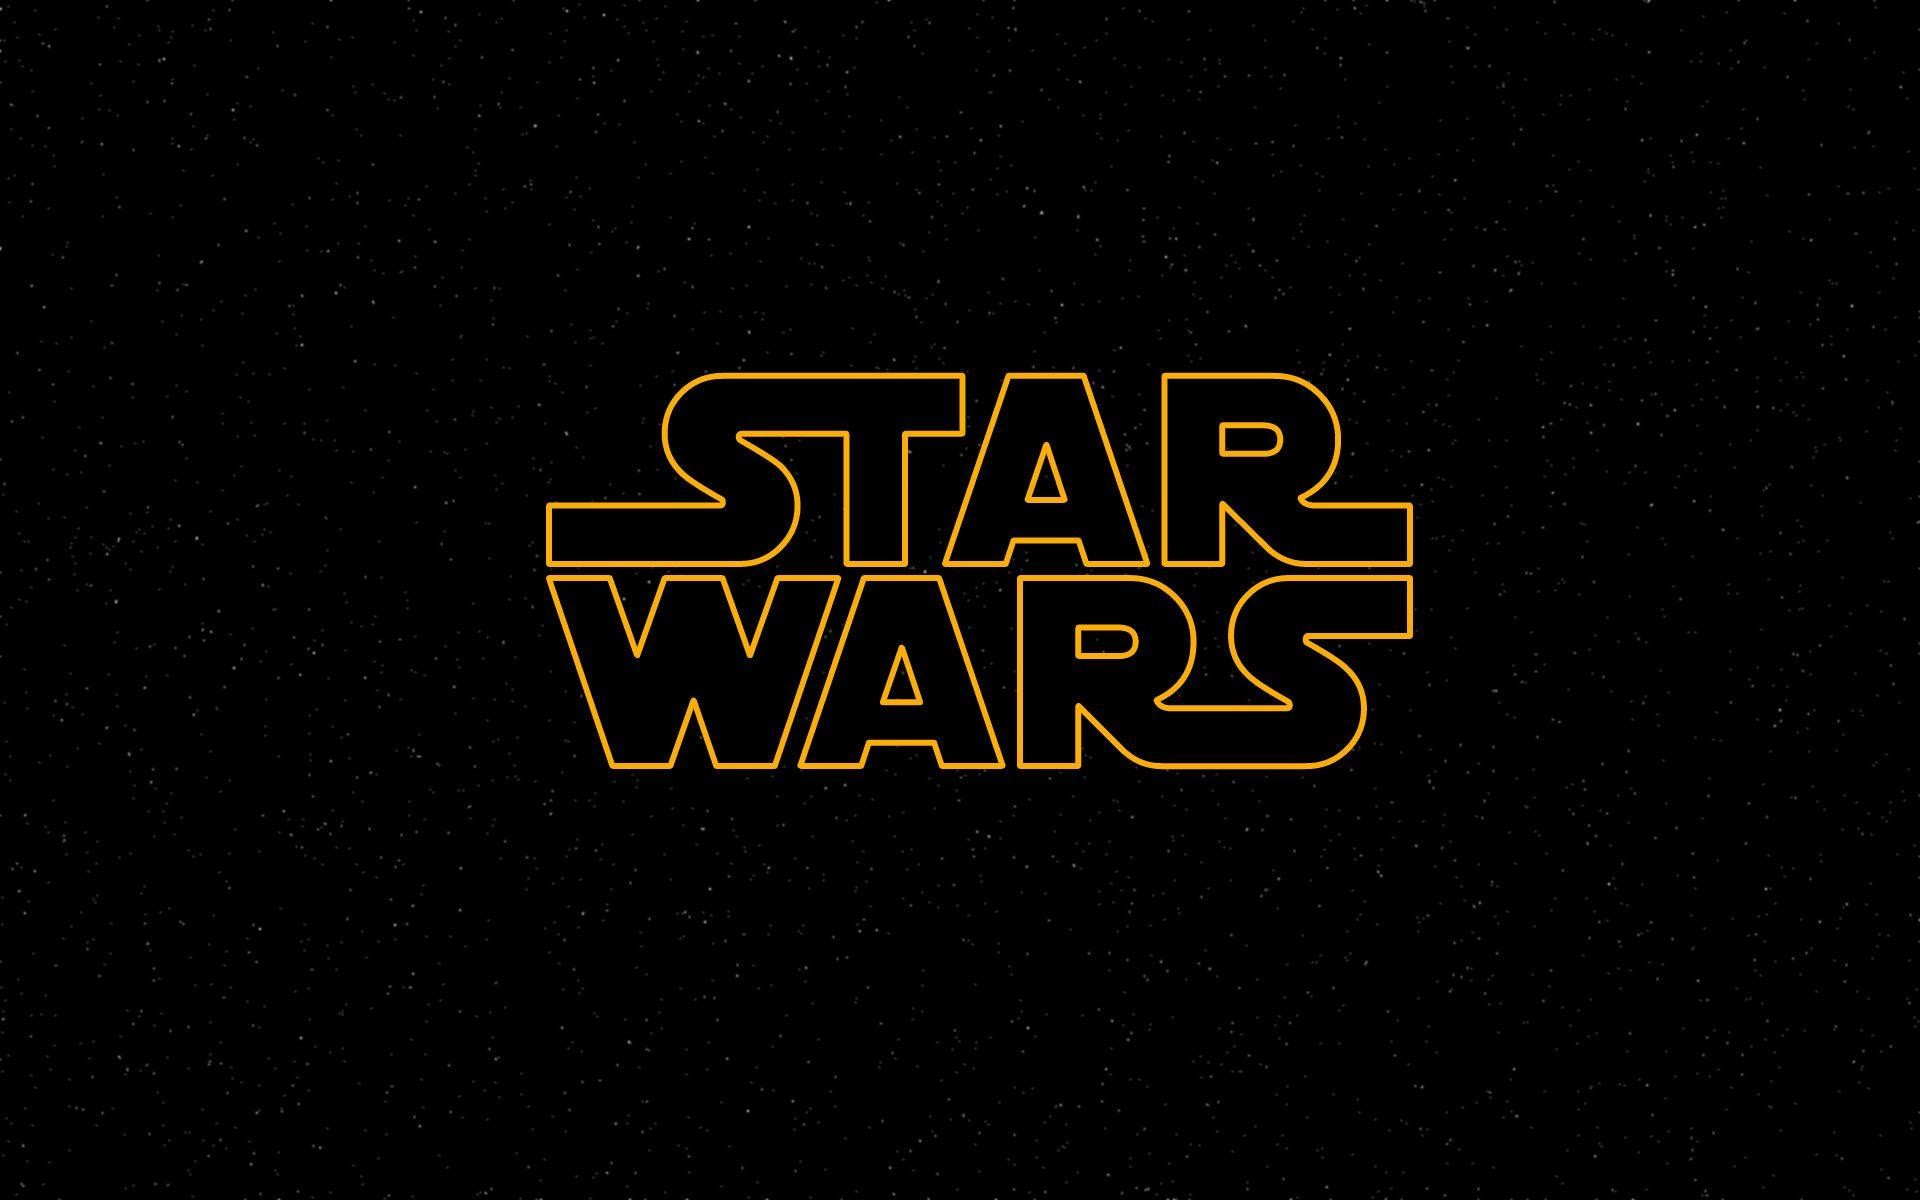 1920x1200 Star Wars Logo Wallpapers - Full HD wallpaper search